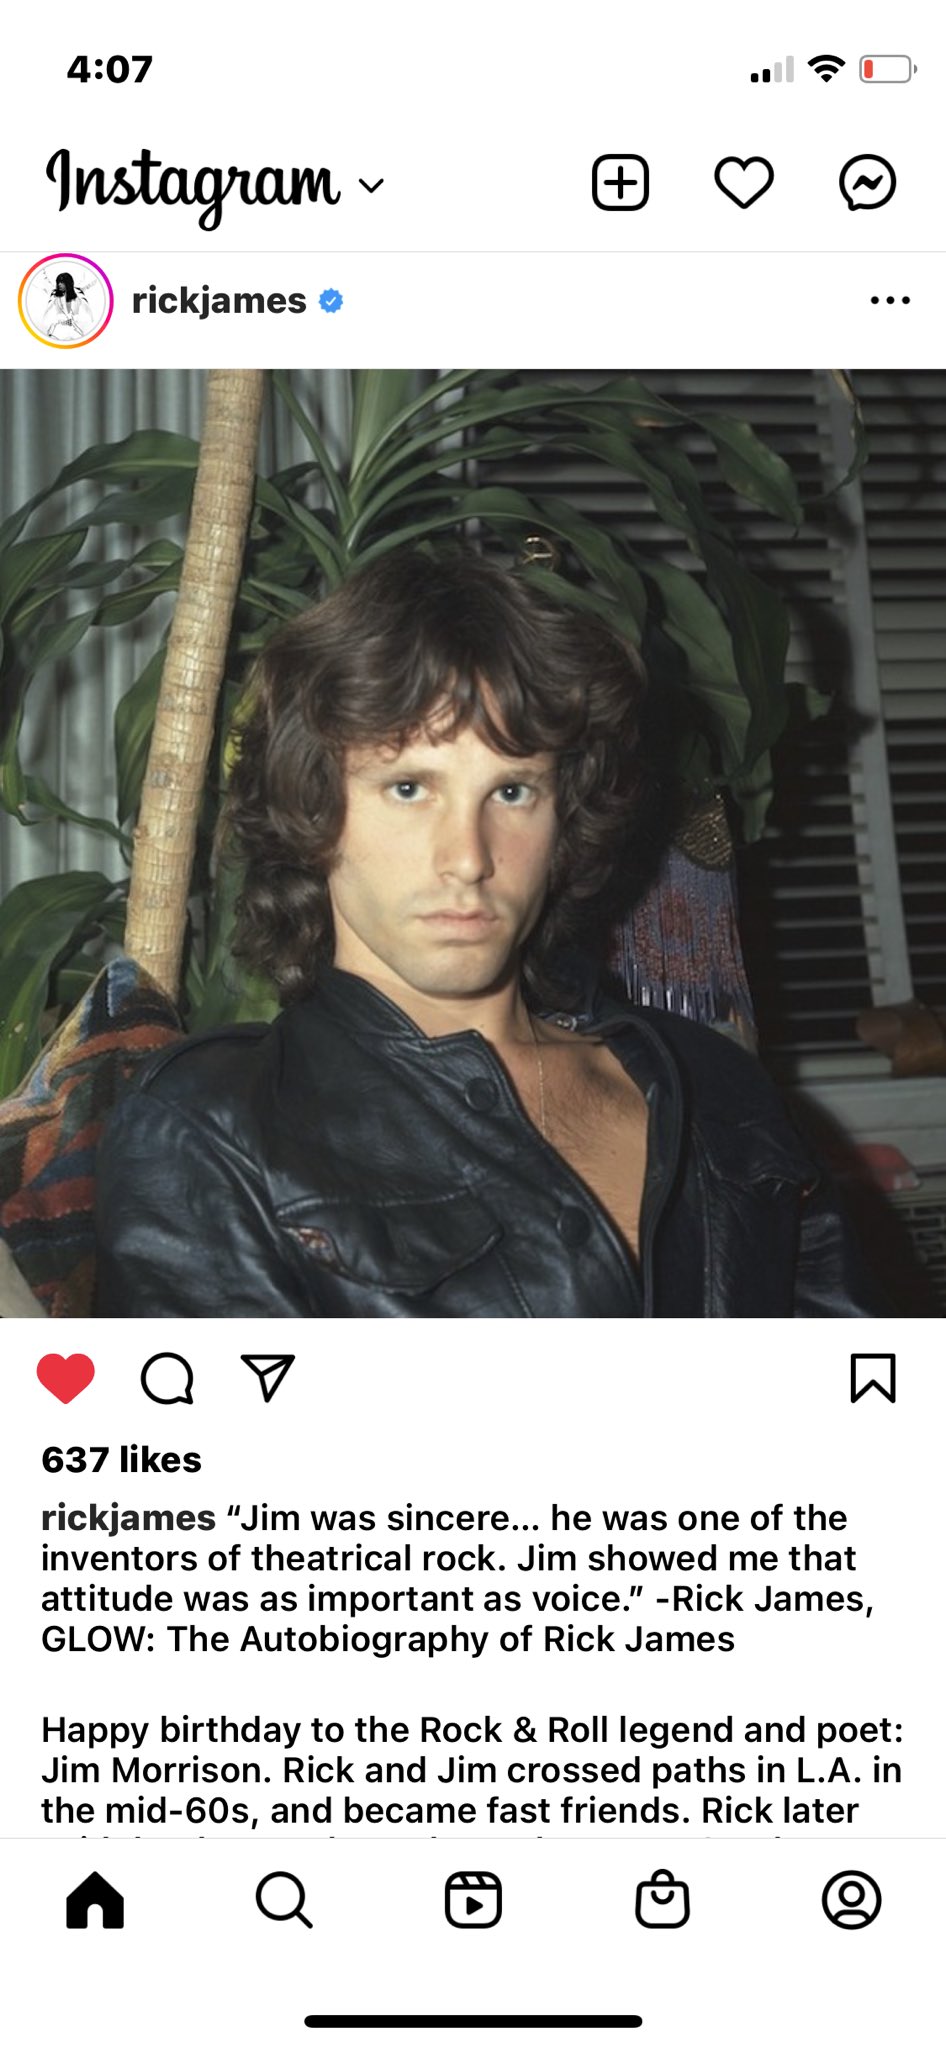 Happy Birthday Jim Morrison - Lead Singer if         